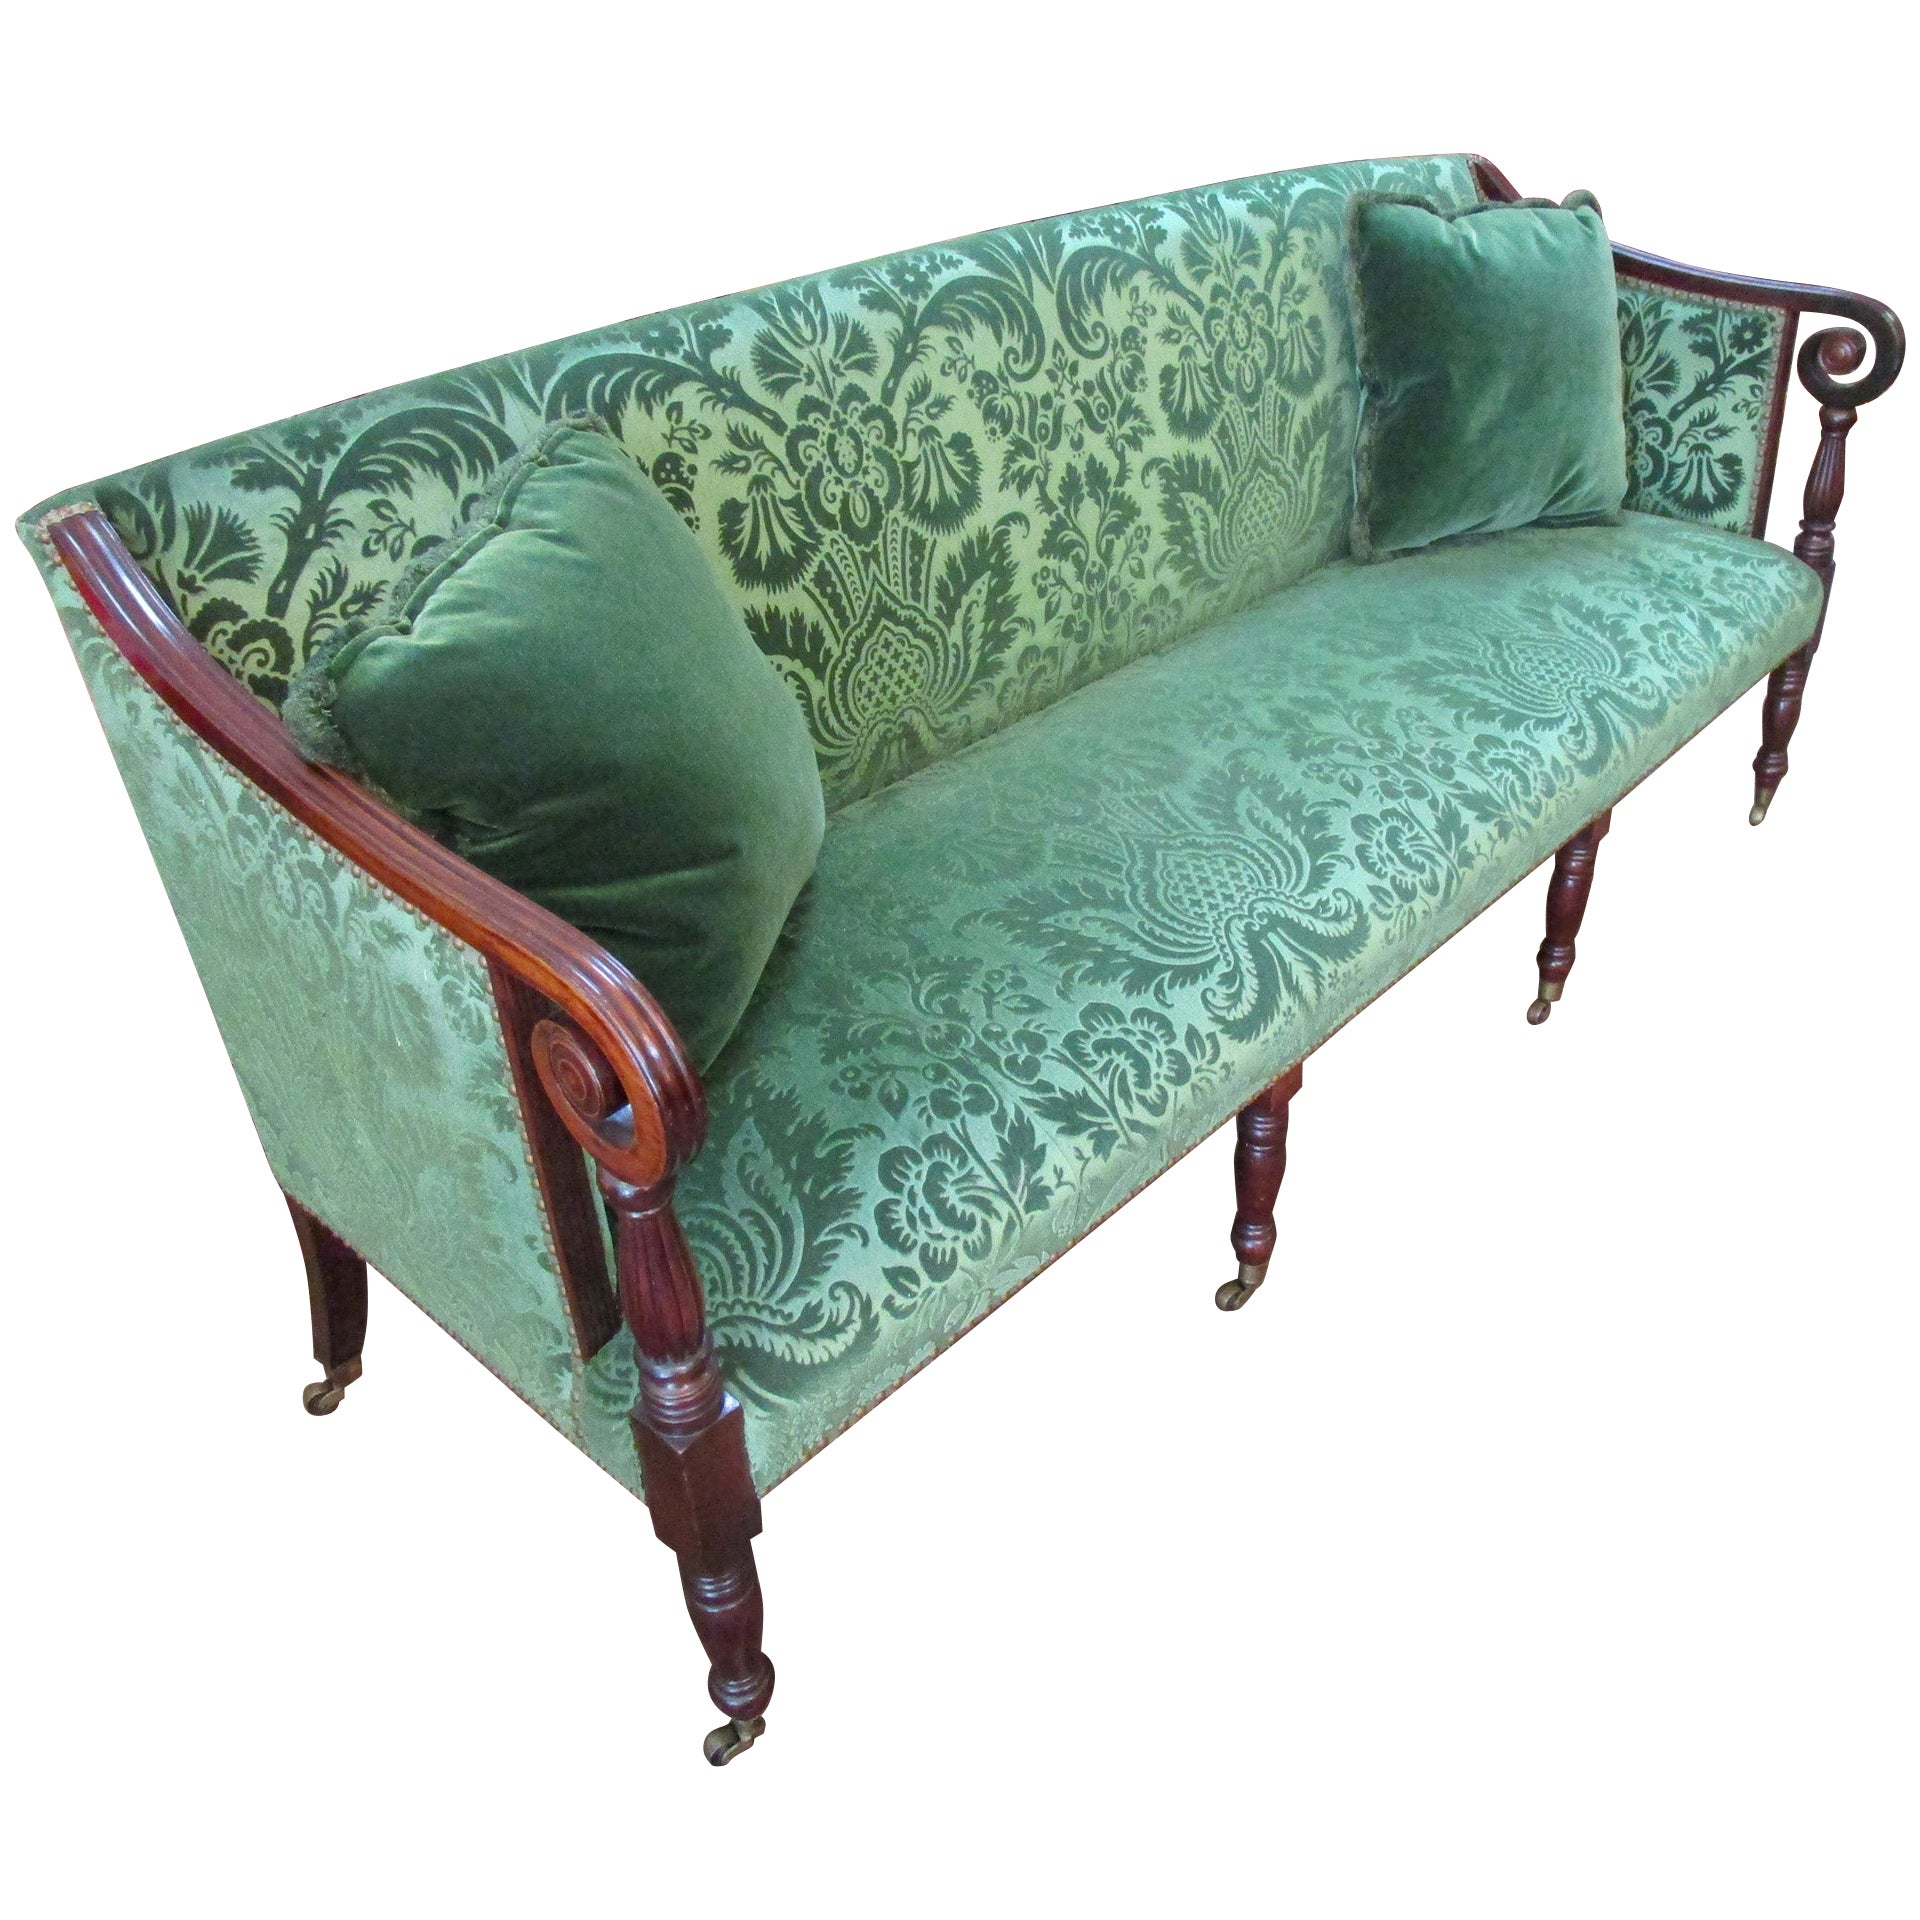 Sheraton English Carved Mahogany Upholstered Sofa circa 1820  For Sale